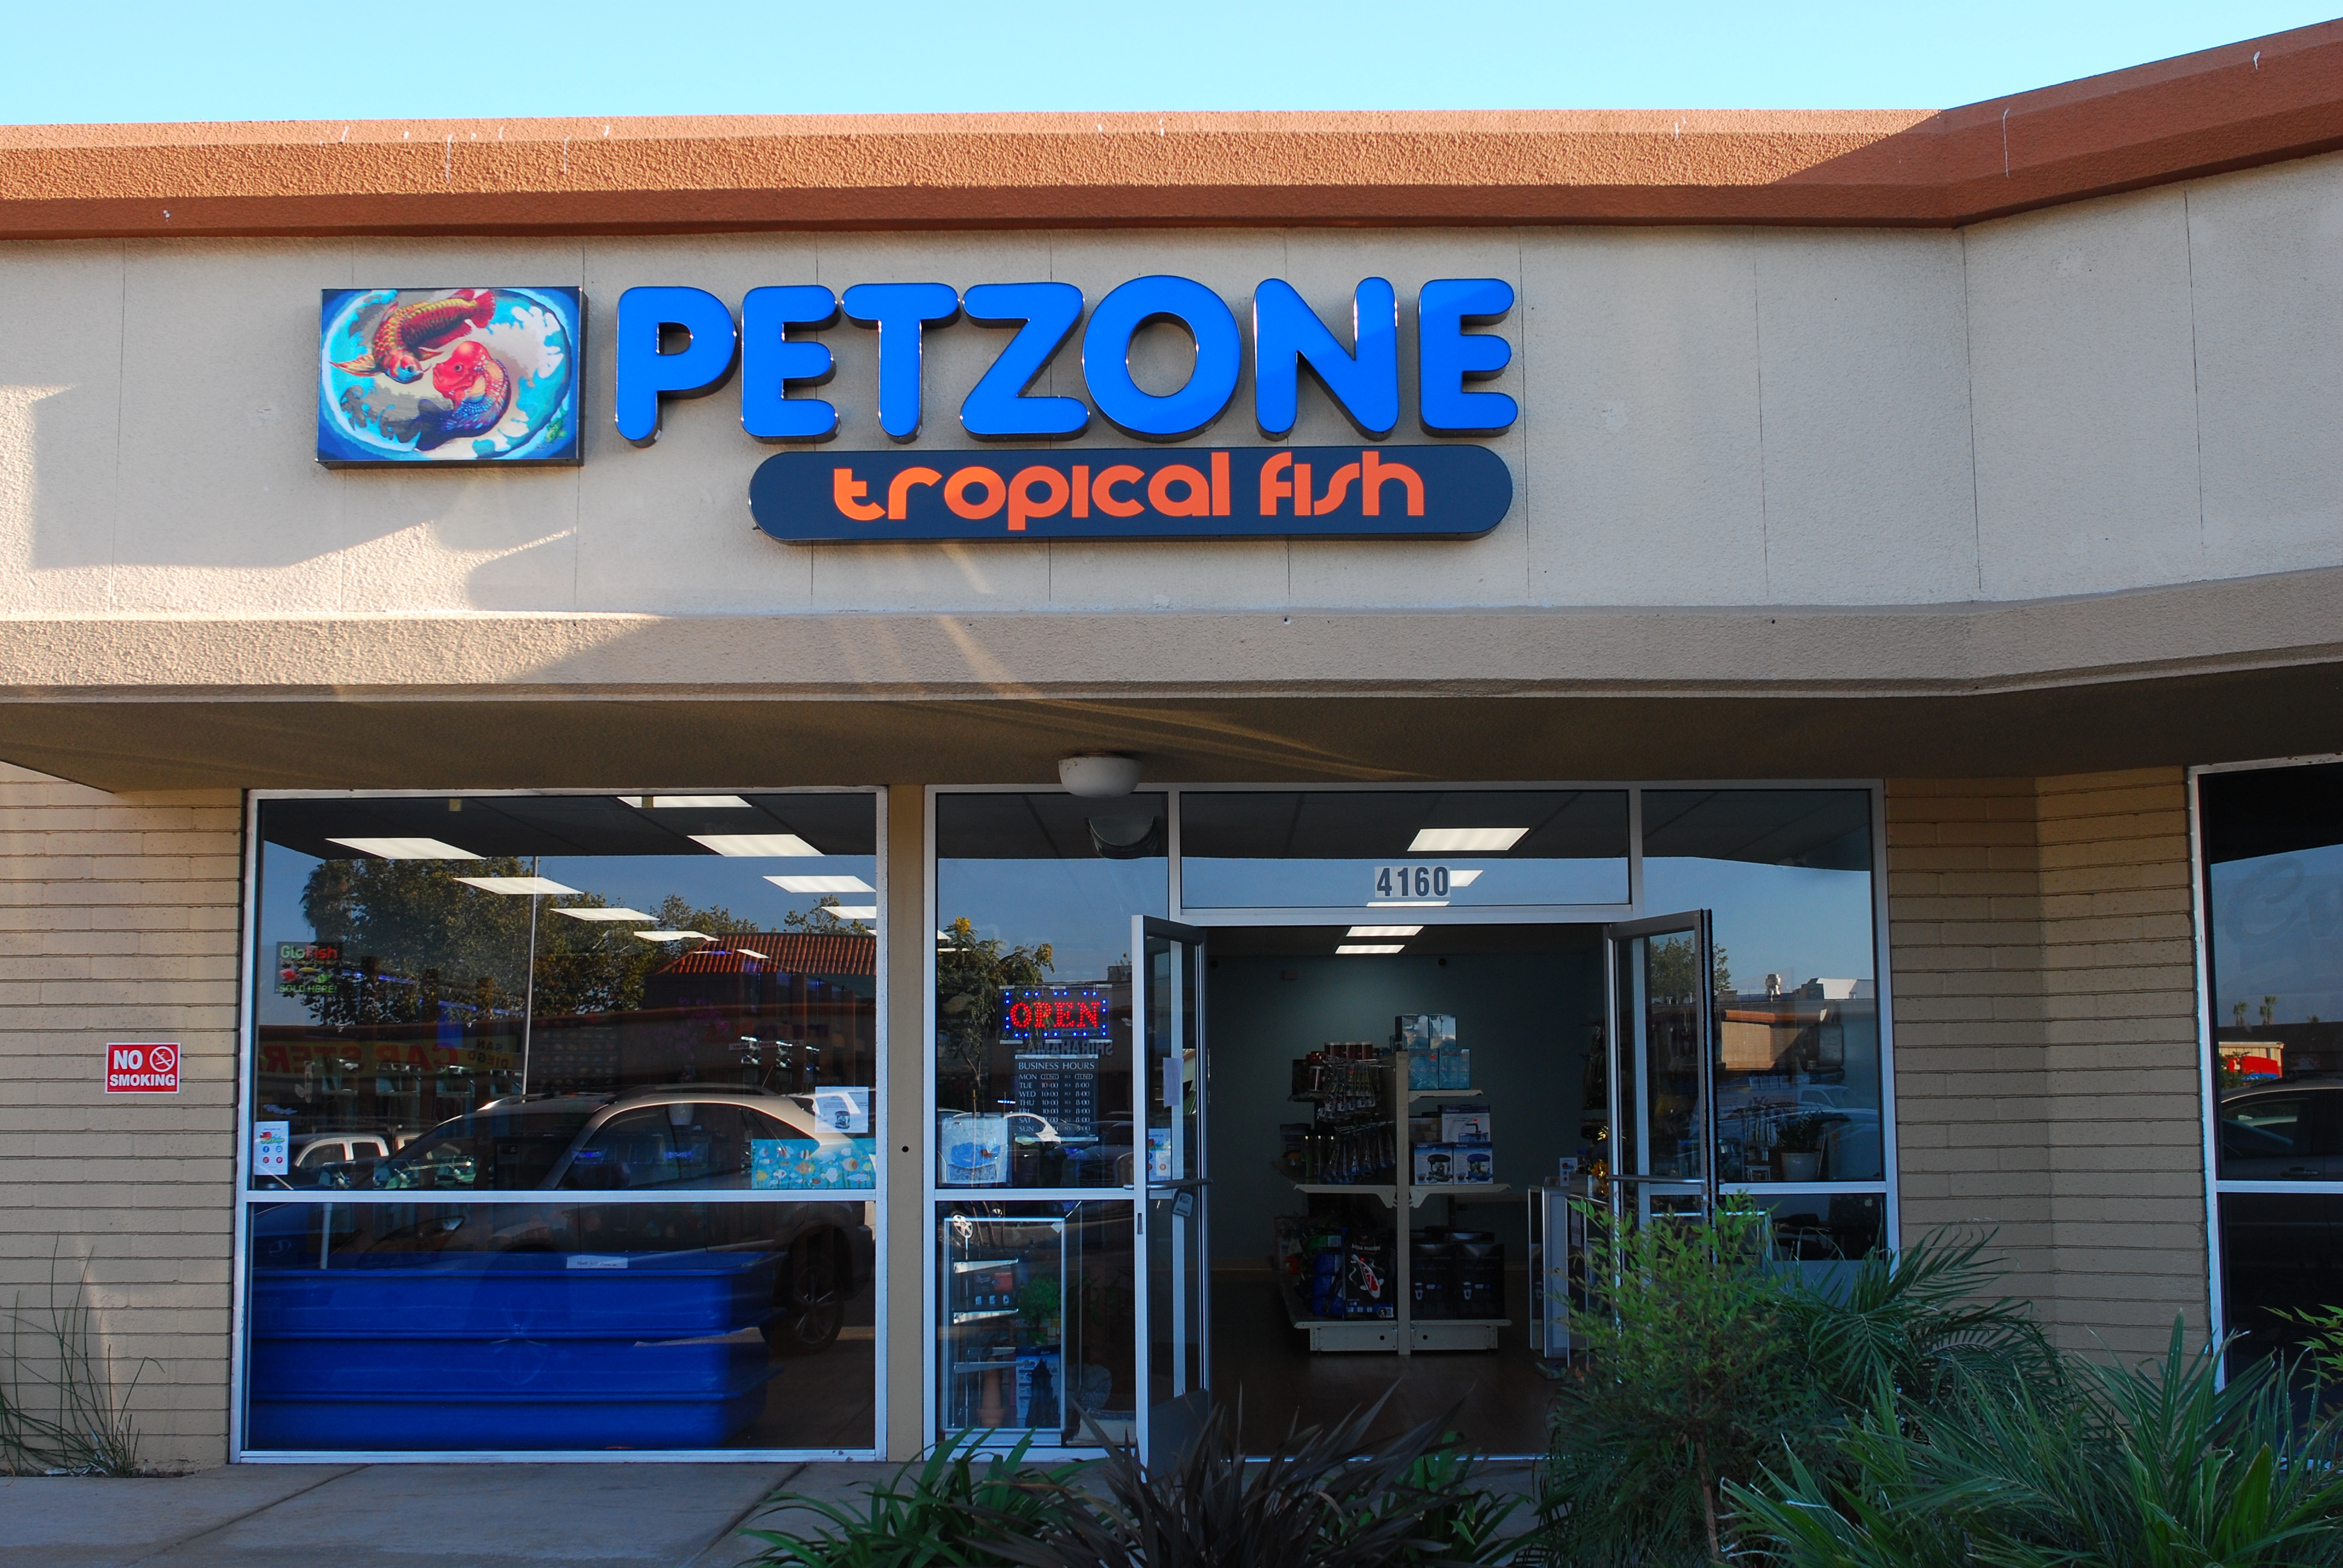 Convoy/Kearny Mesa Pet Zone Tropical Fish Storefront 